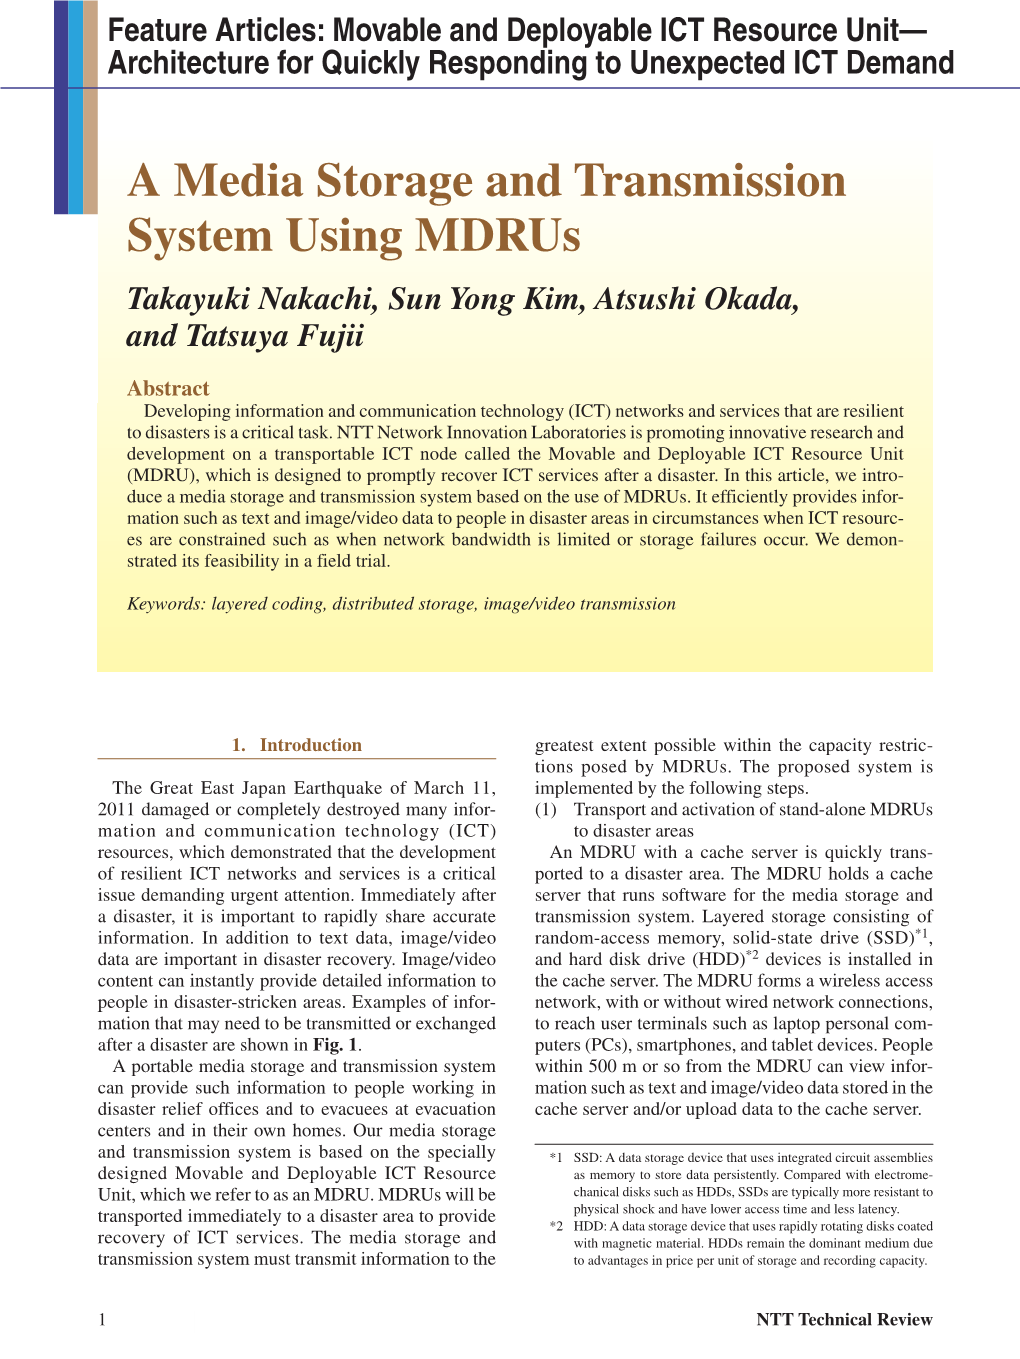 NTT Technical Review, May 2015, Vol. 13, No. 5